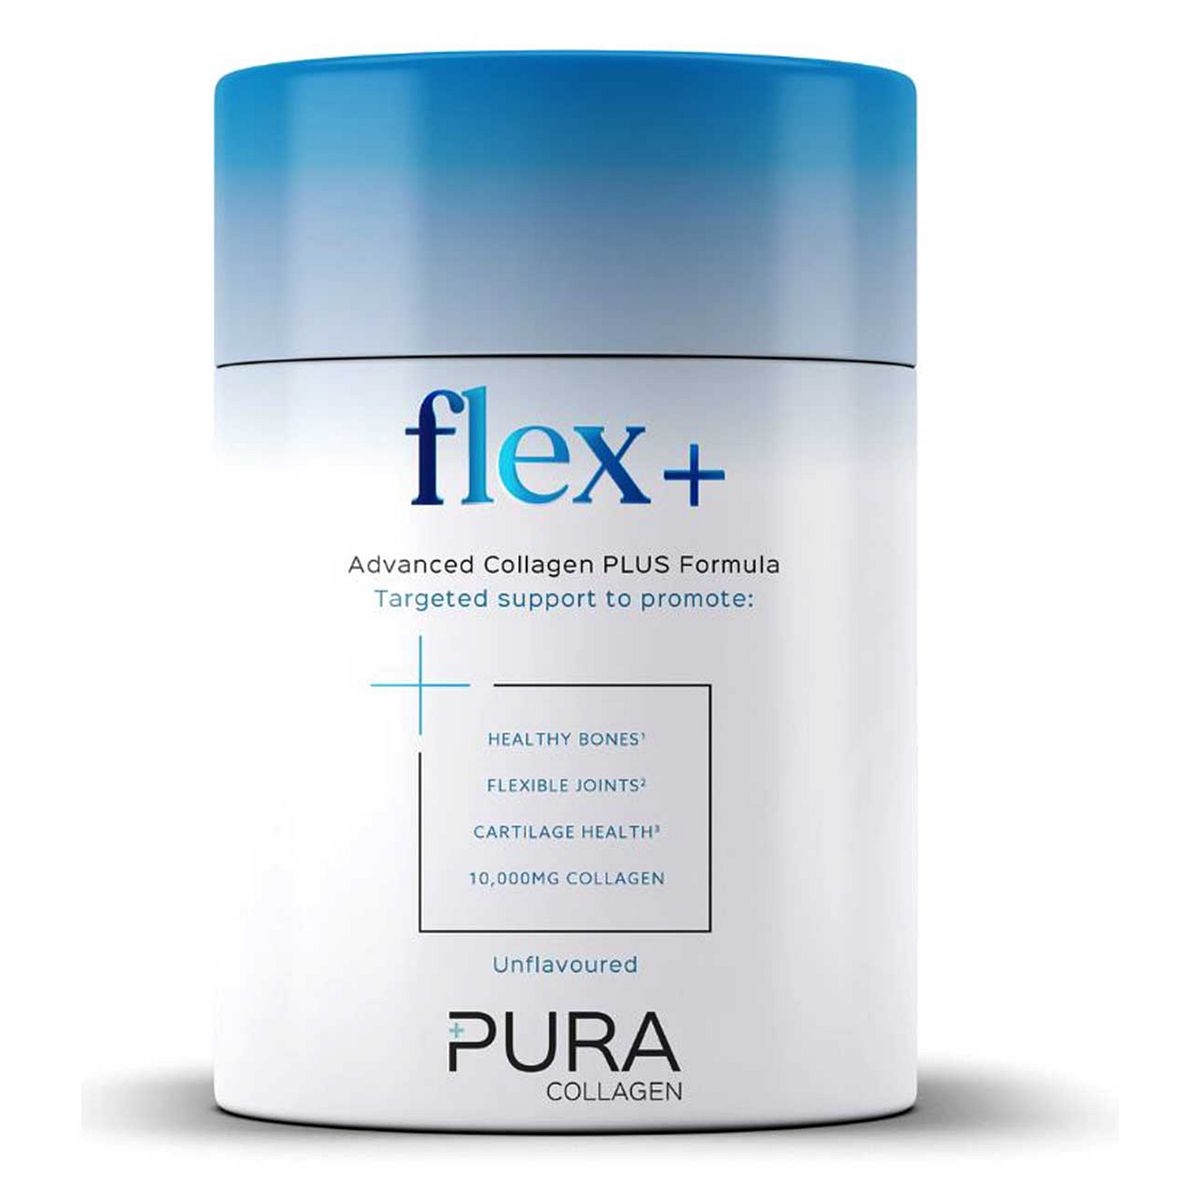 Pura Collagen flex+ Advanced Collagen PLUS Formula 282g GOODS Boots   